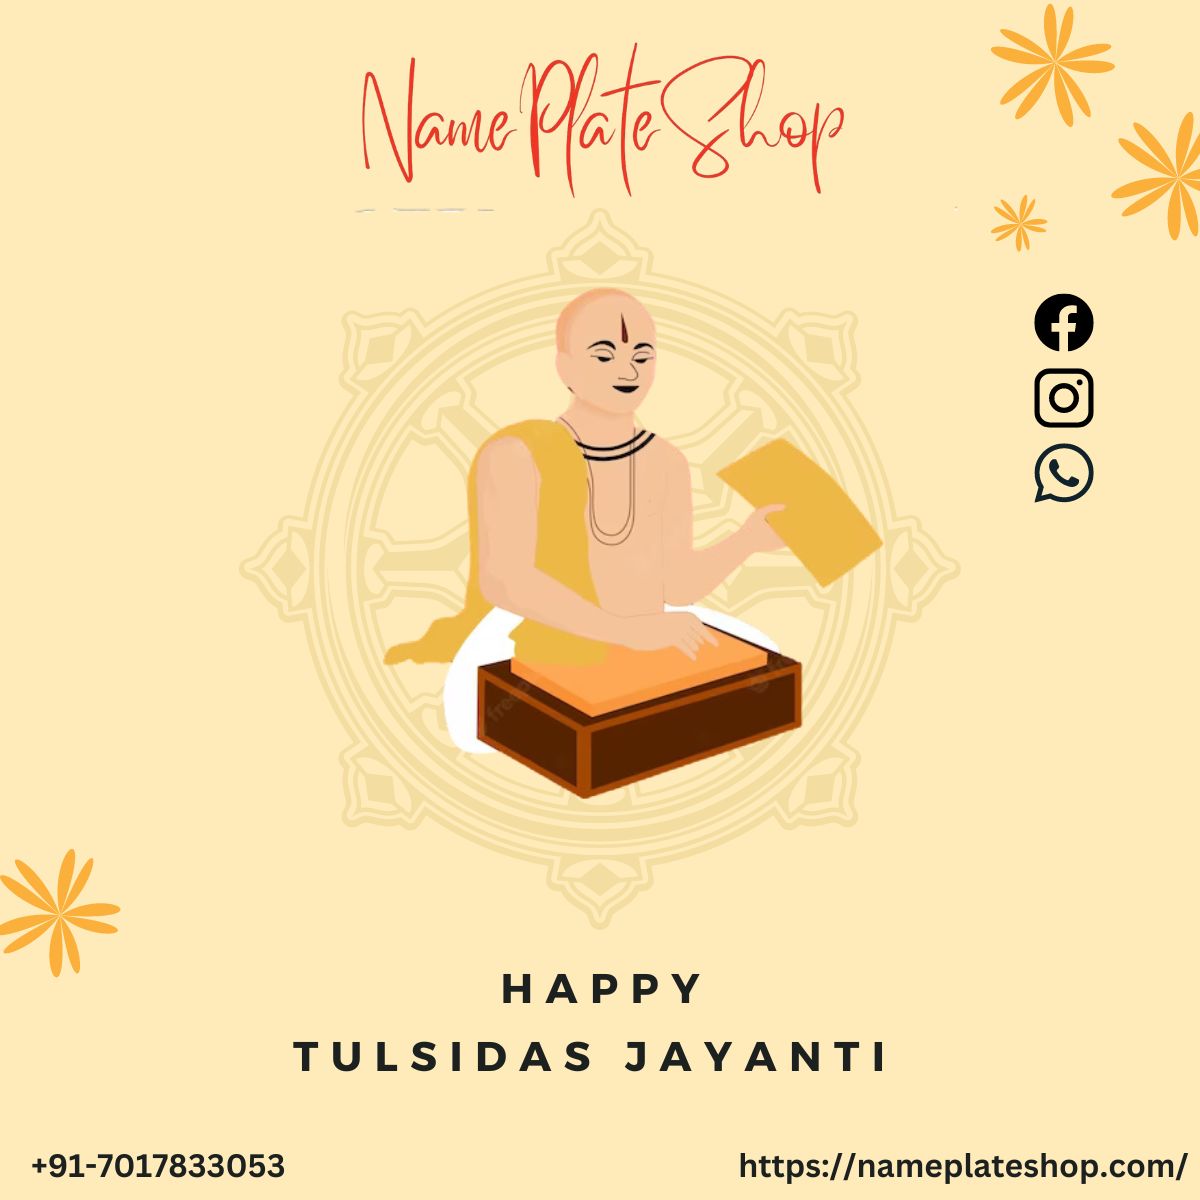 Happy Tulsidas Jayanti to All of You